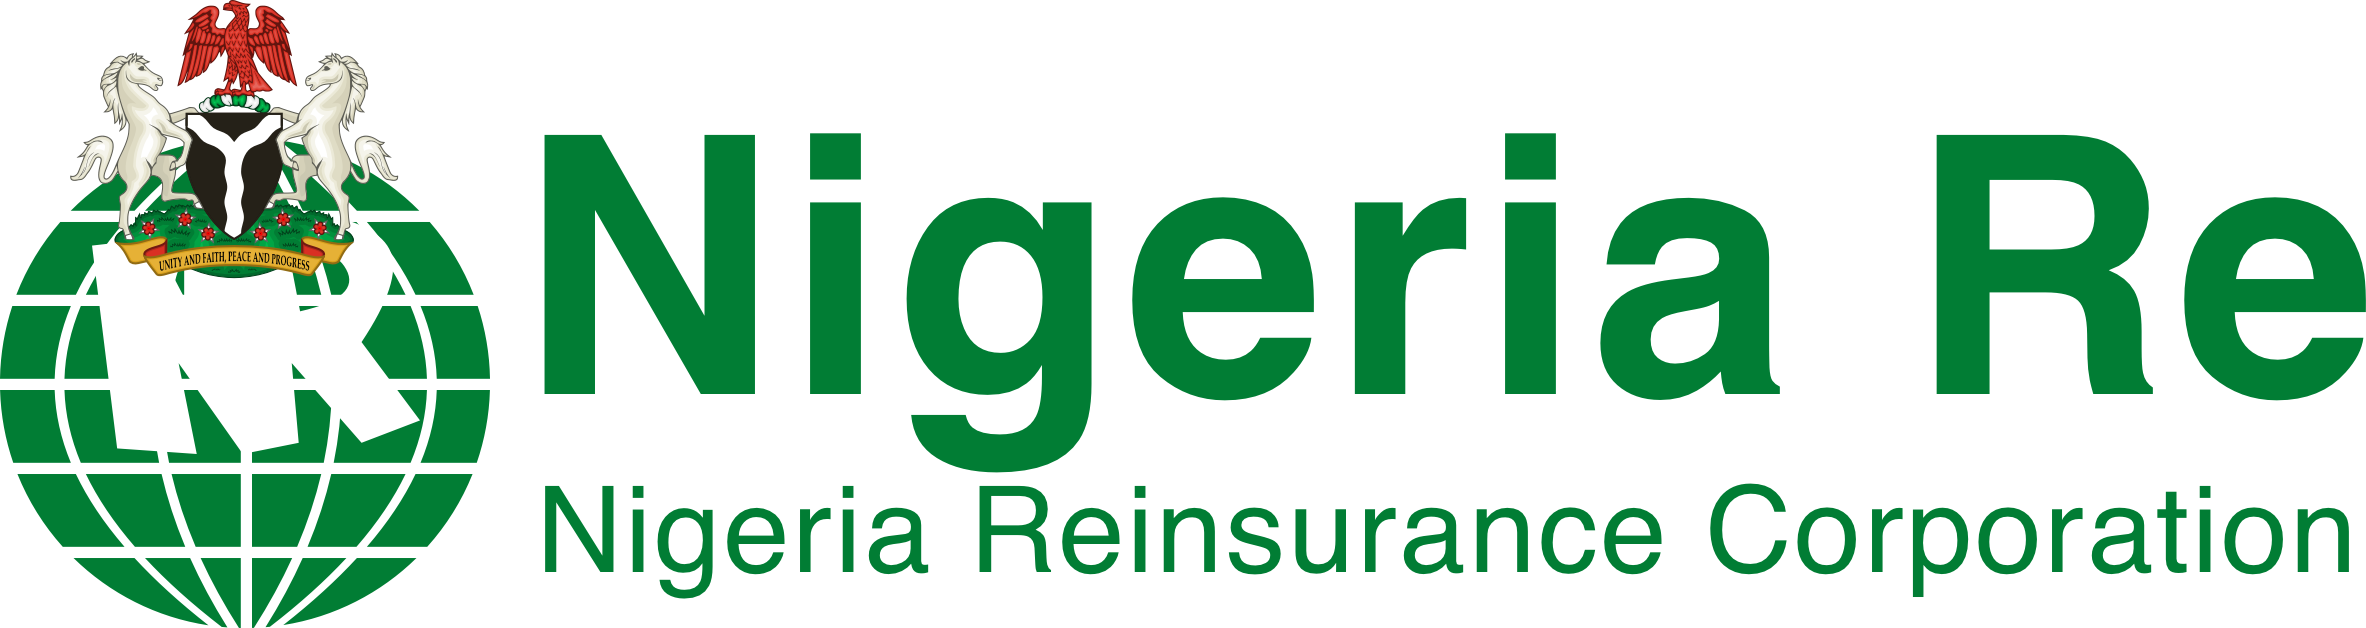 Nigeria Reinsurance Corporation